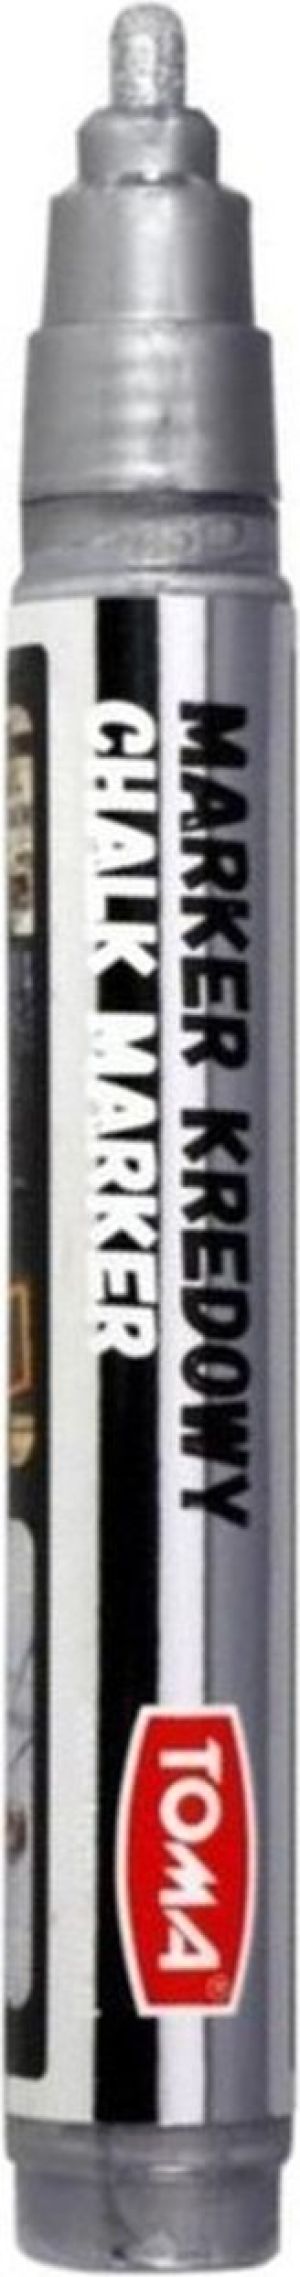 Toma Marker kredowy 4,5mm srebrny p10. 1